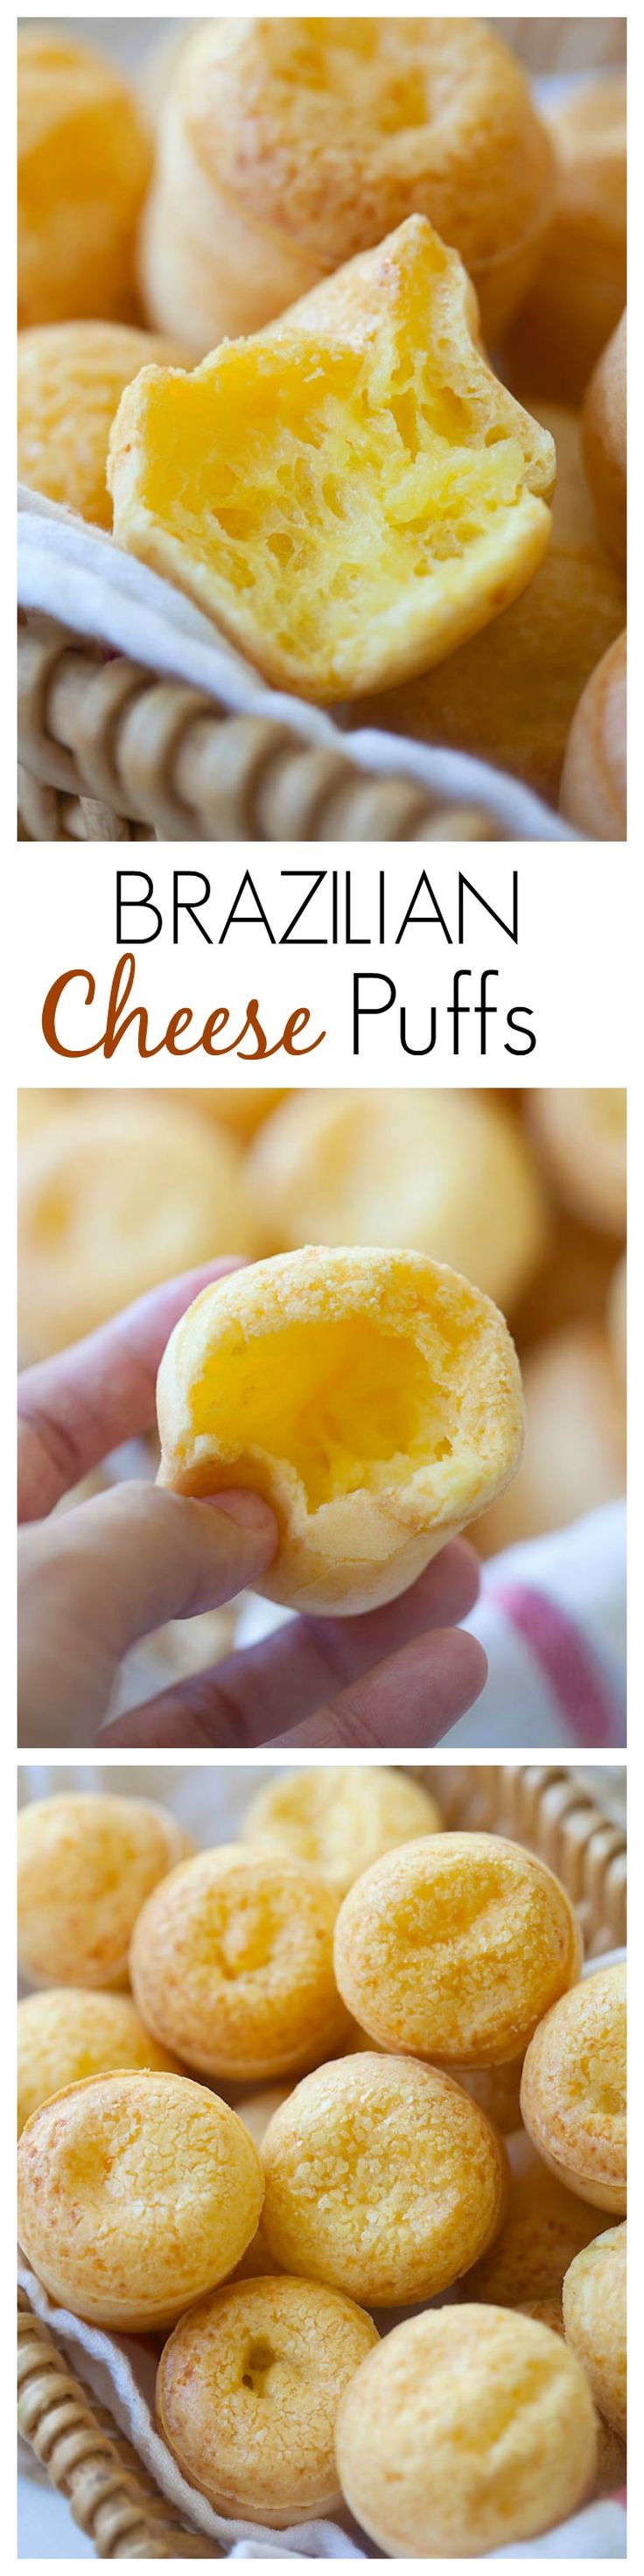 brazilian-cheese-puffs.jpg